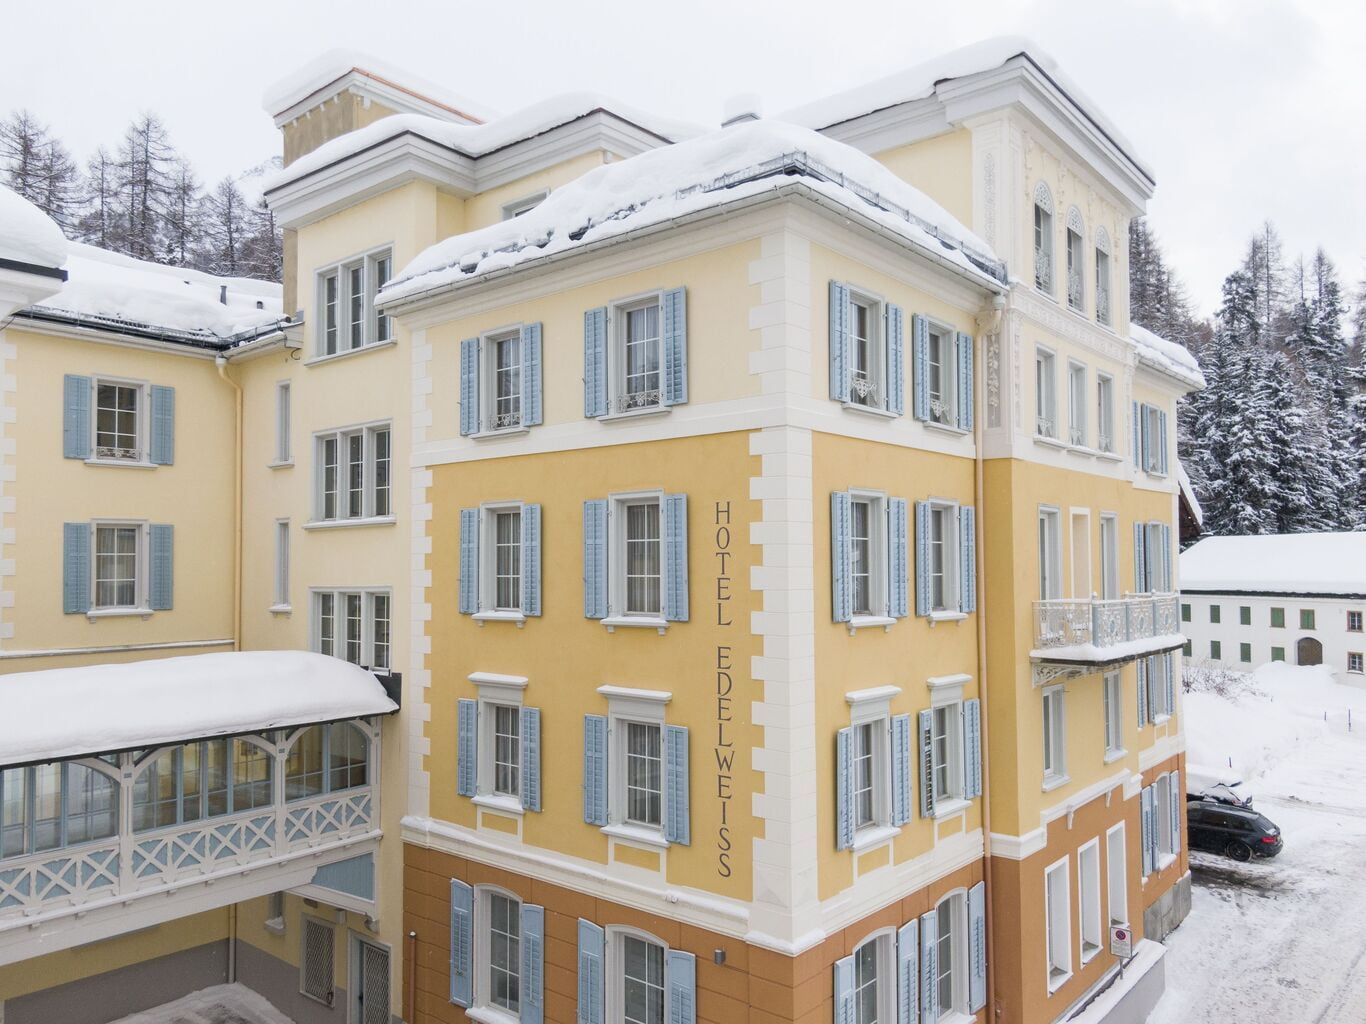 Edelweiss Swiss Quality Hotel, Sils Maria | Engadin, Schweiz